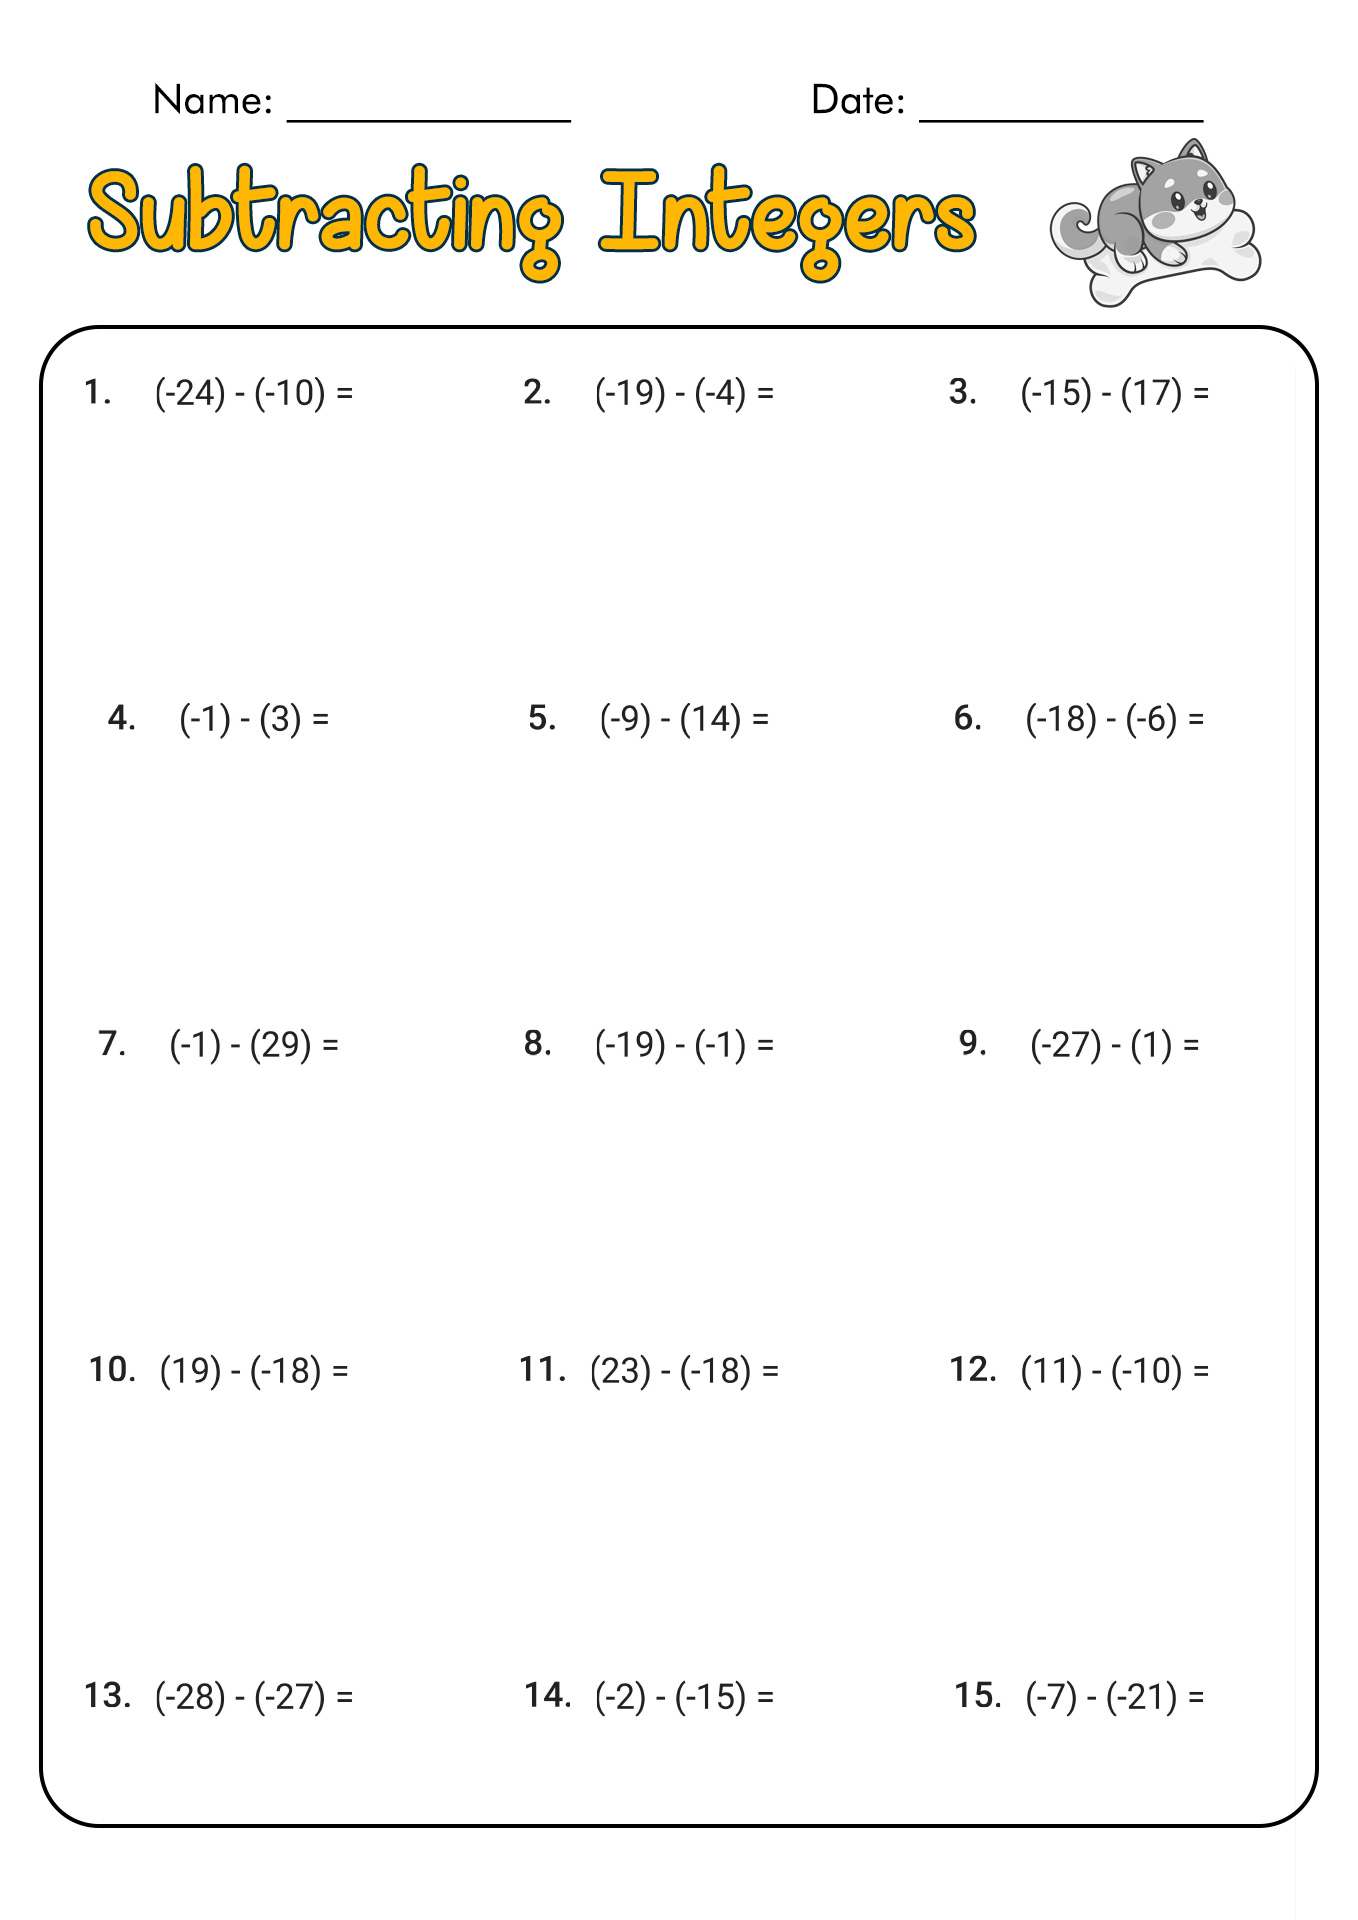 Subtracting Integers 6th Grade Math Worksheets